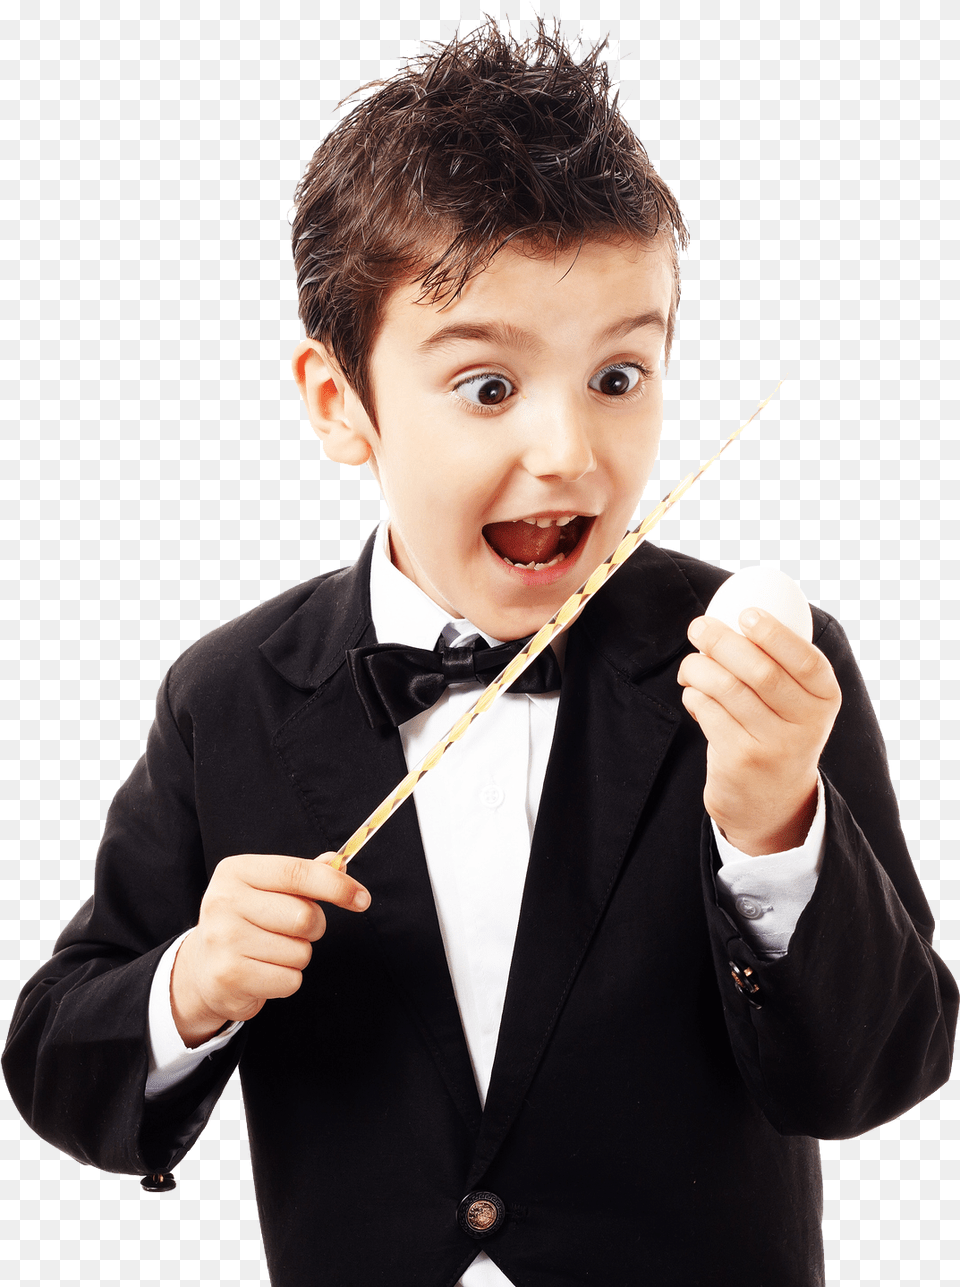 Null Kid Magician, Accessories, Tie, Suit, Portrait Png Image